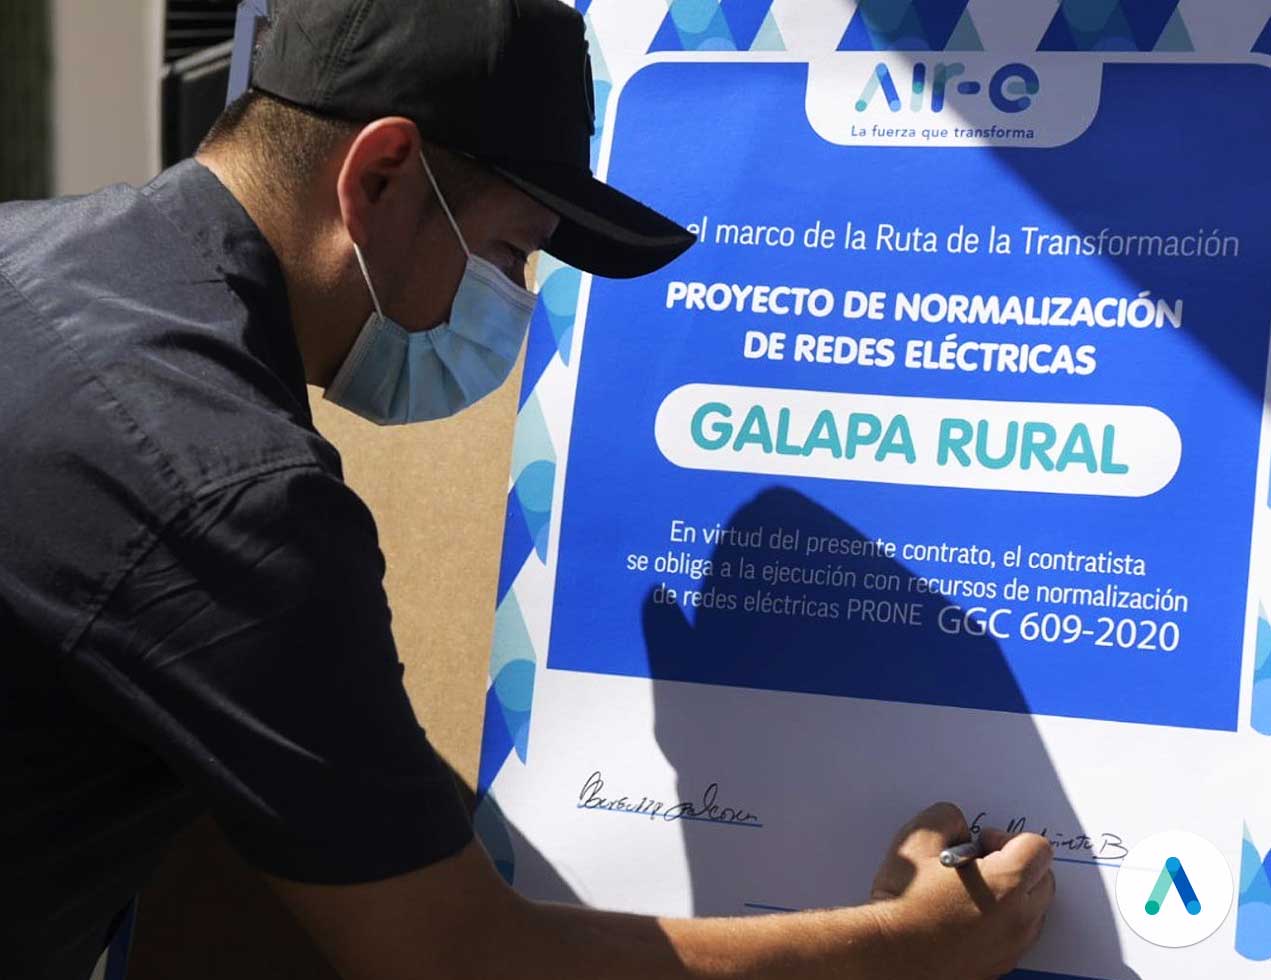 817 familias en zona rural de Galapa tendrán redes eléctricas normalizadas